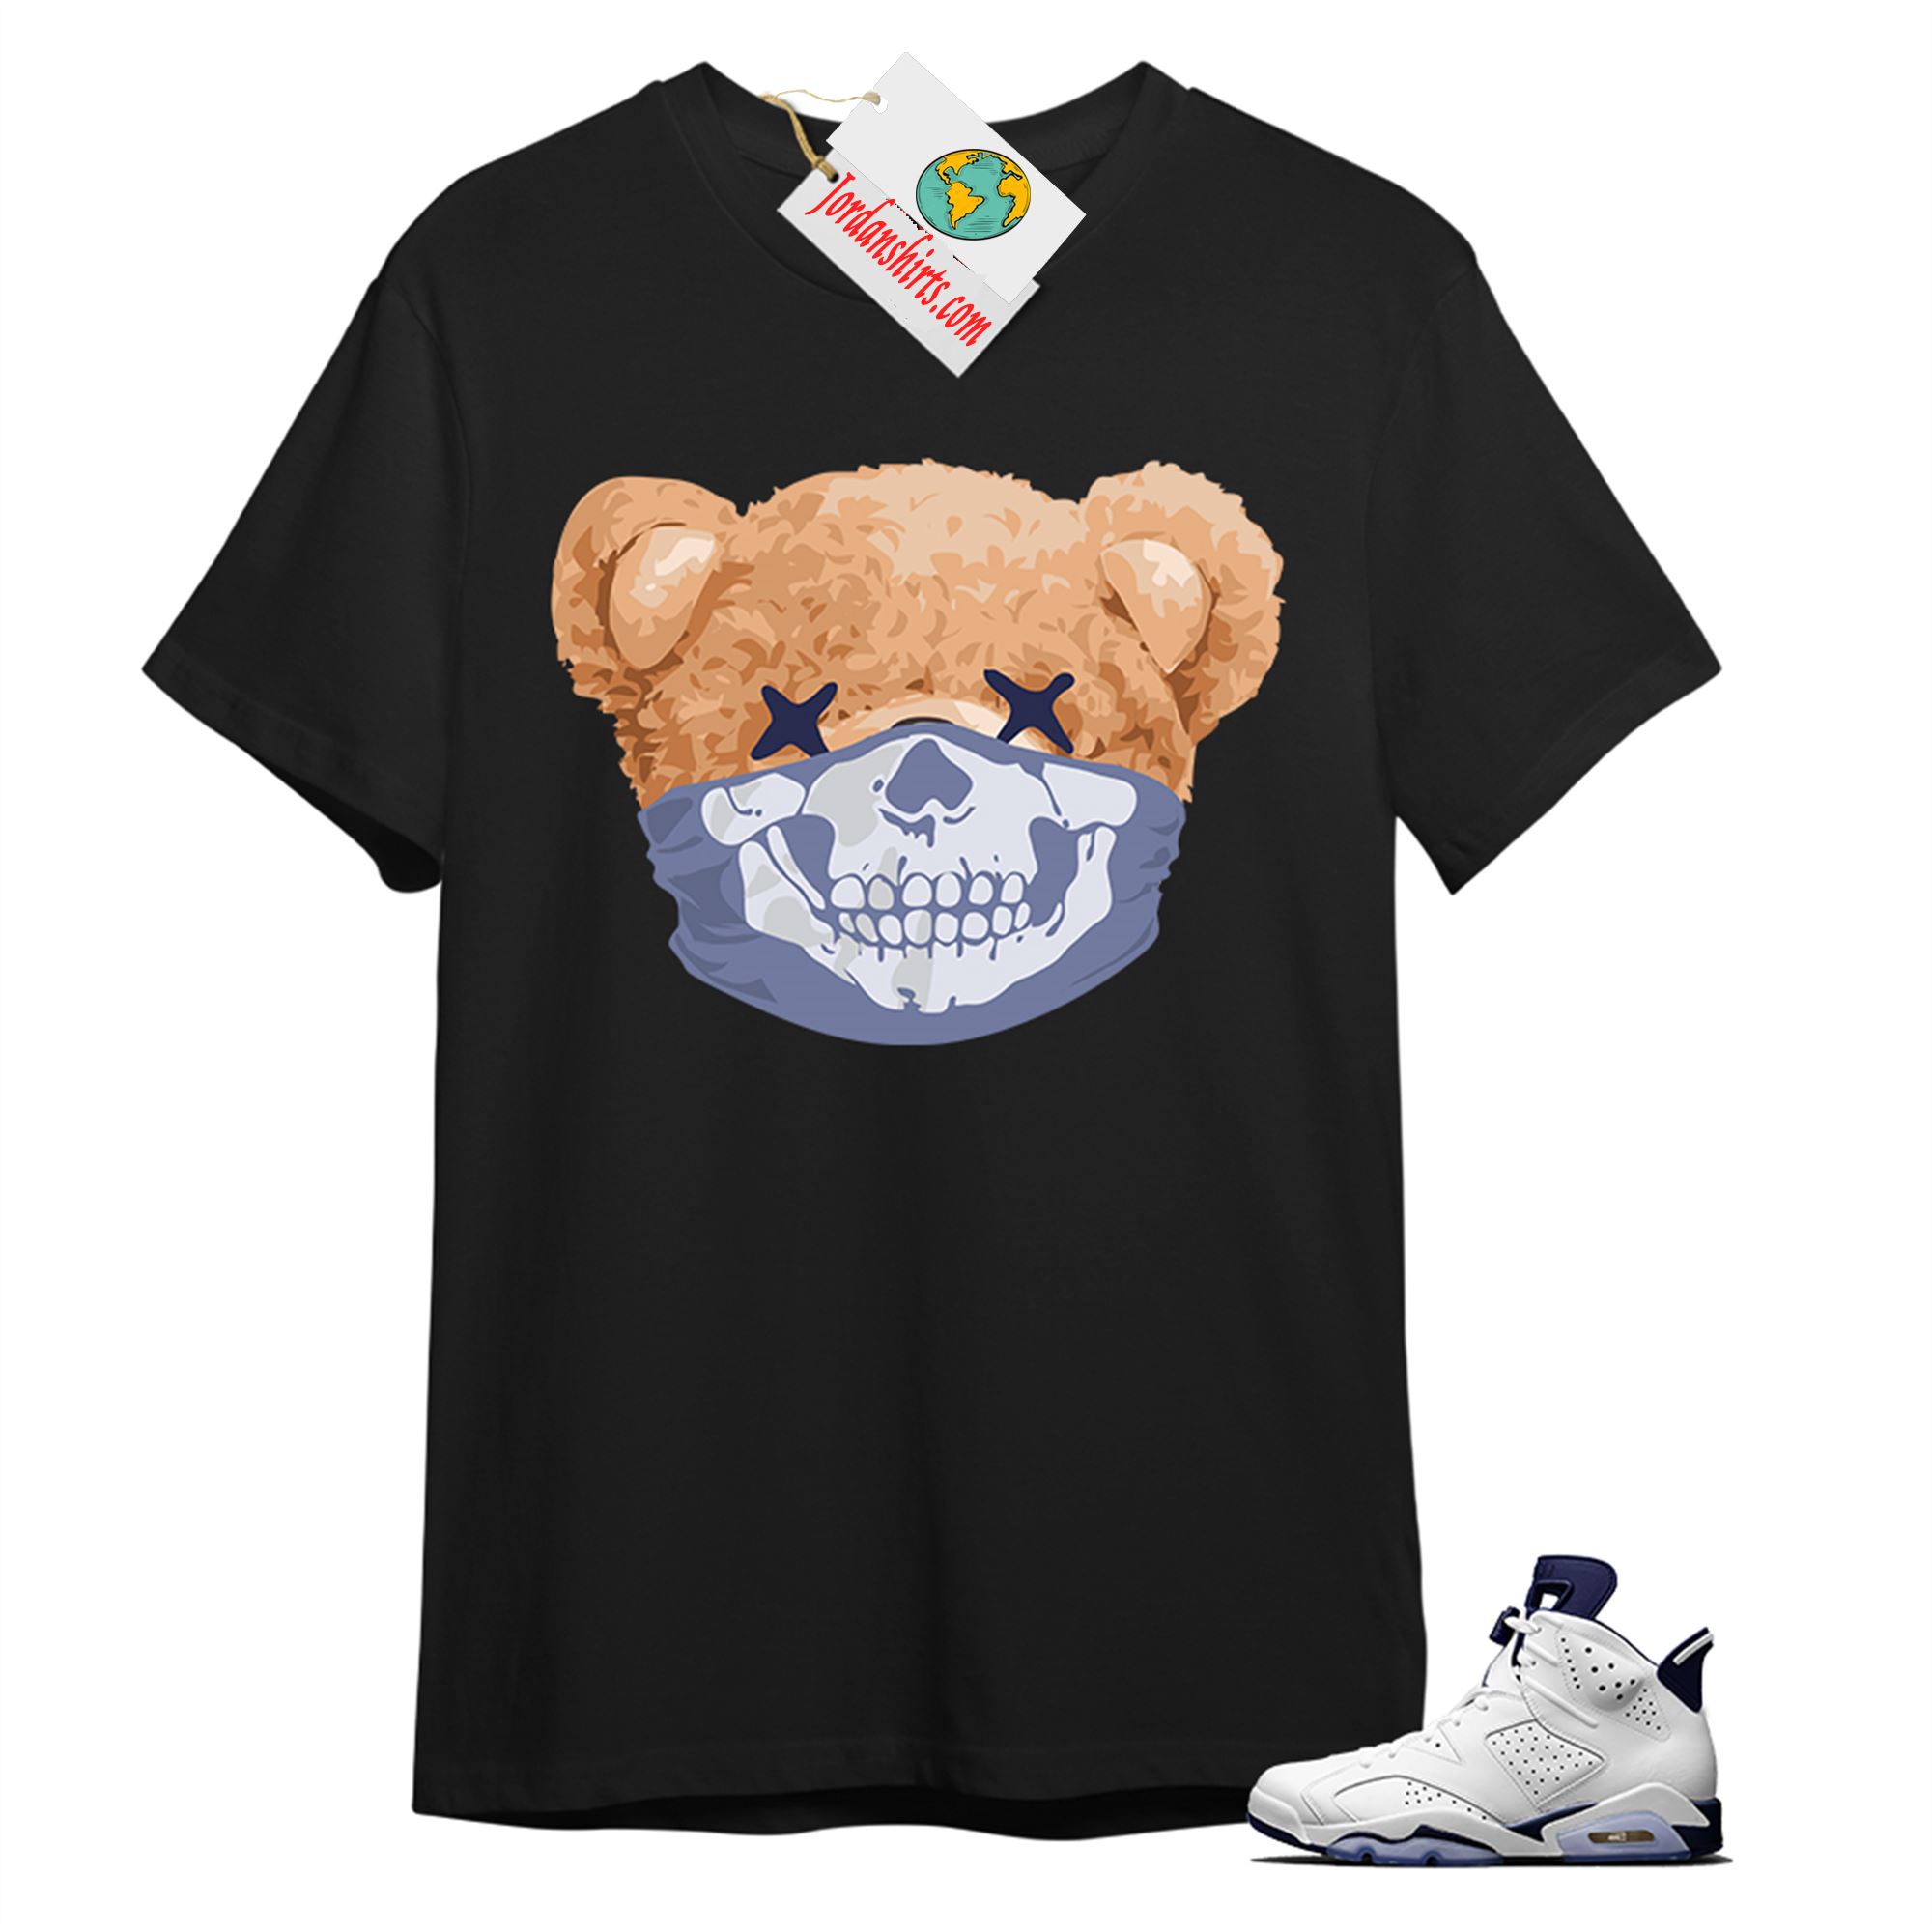 Jordan 6 Shirt, Teddy Bear Skull Bandana Black T-shirt Air Jordan 6 Midnight Navy 6s Size Up To 5xl